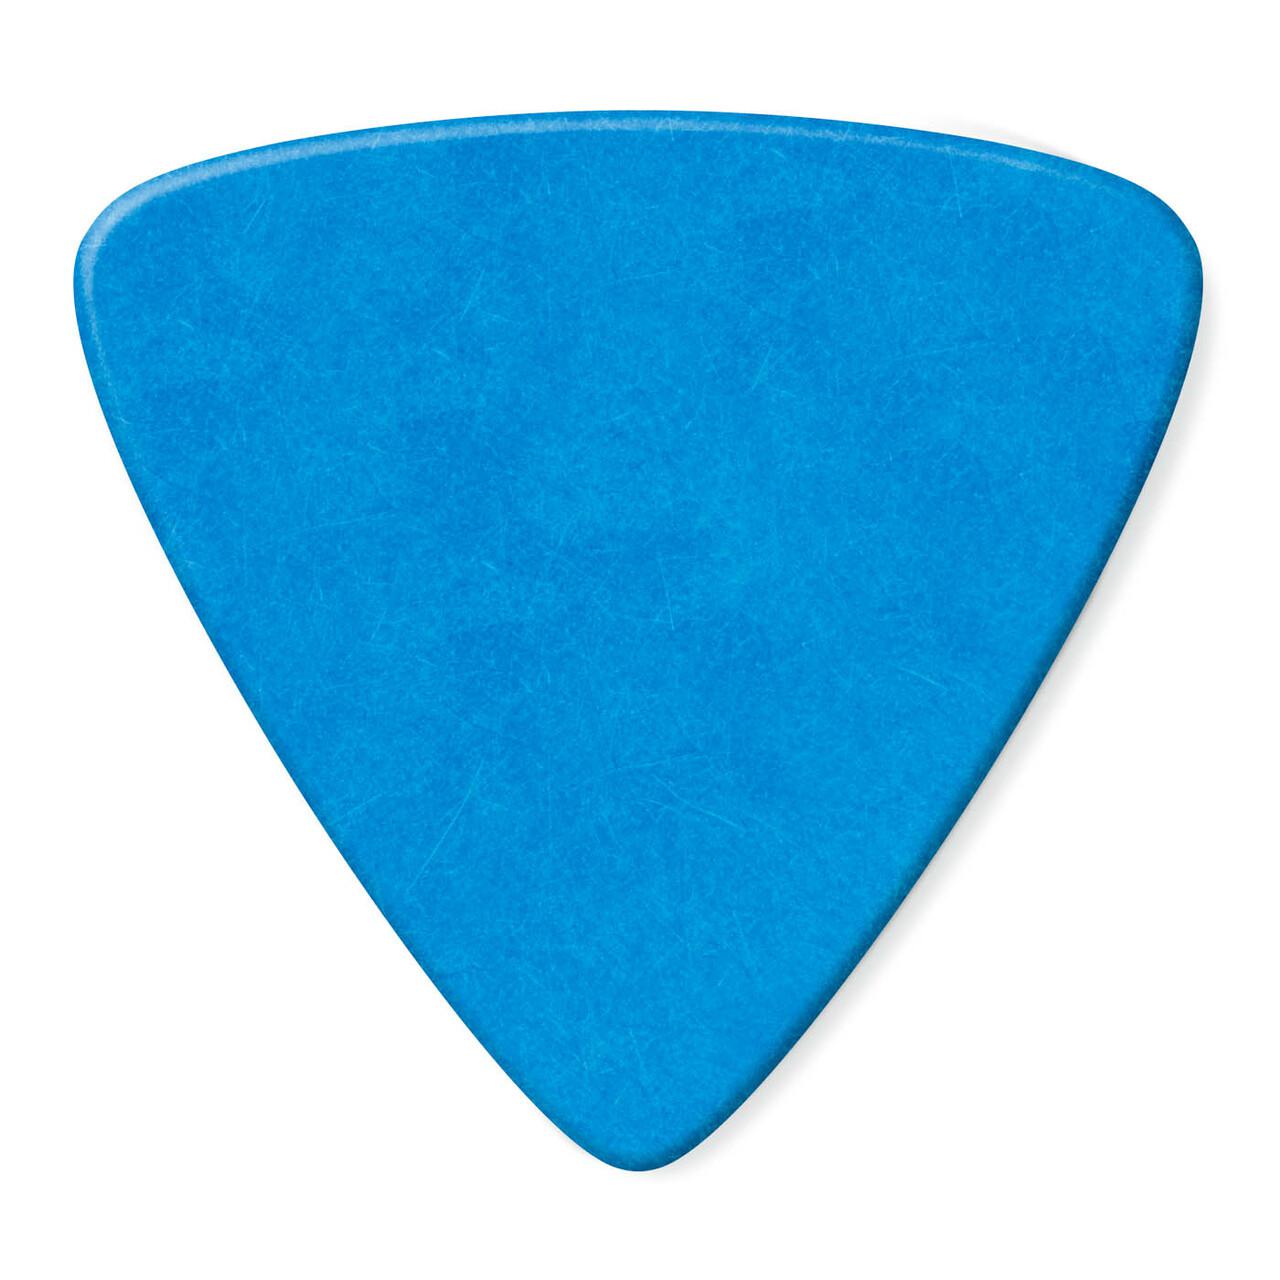 Dunlop - 6 Plumillas Tortex Triángulo, CaliPre: 1.0 Color: Azúl Mod.431P1.0_32